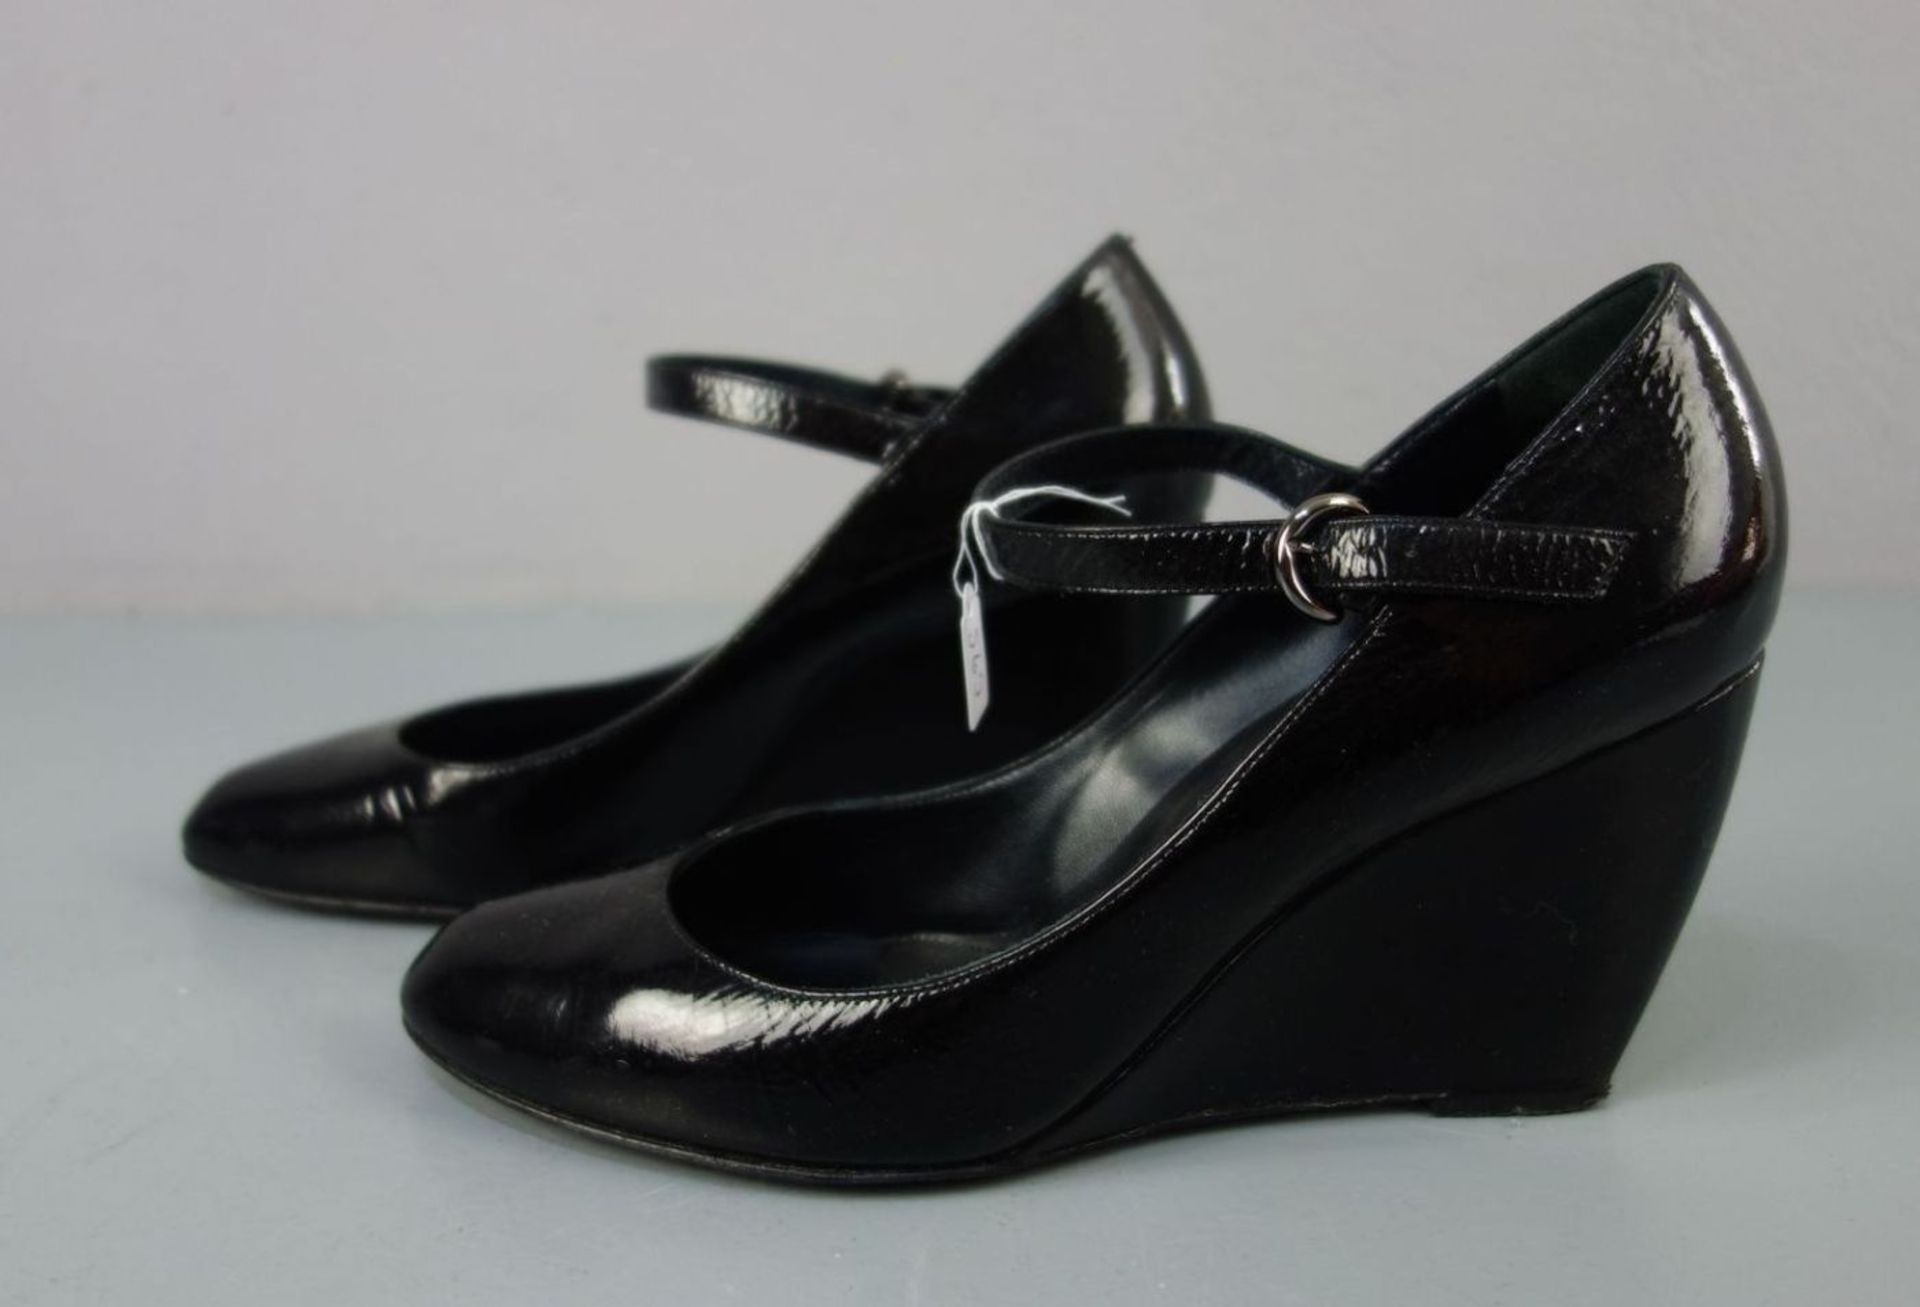 SERGIO ROSSI KEILPUMPS / women's shoes with wedge heel, Made in Italy, schwarzes Lackleder. Pumps - Bild 2 aus 6